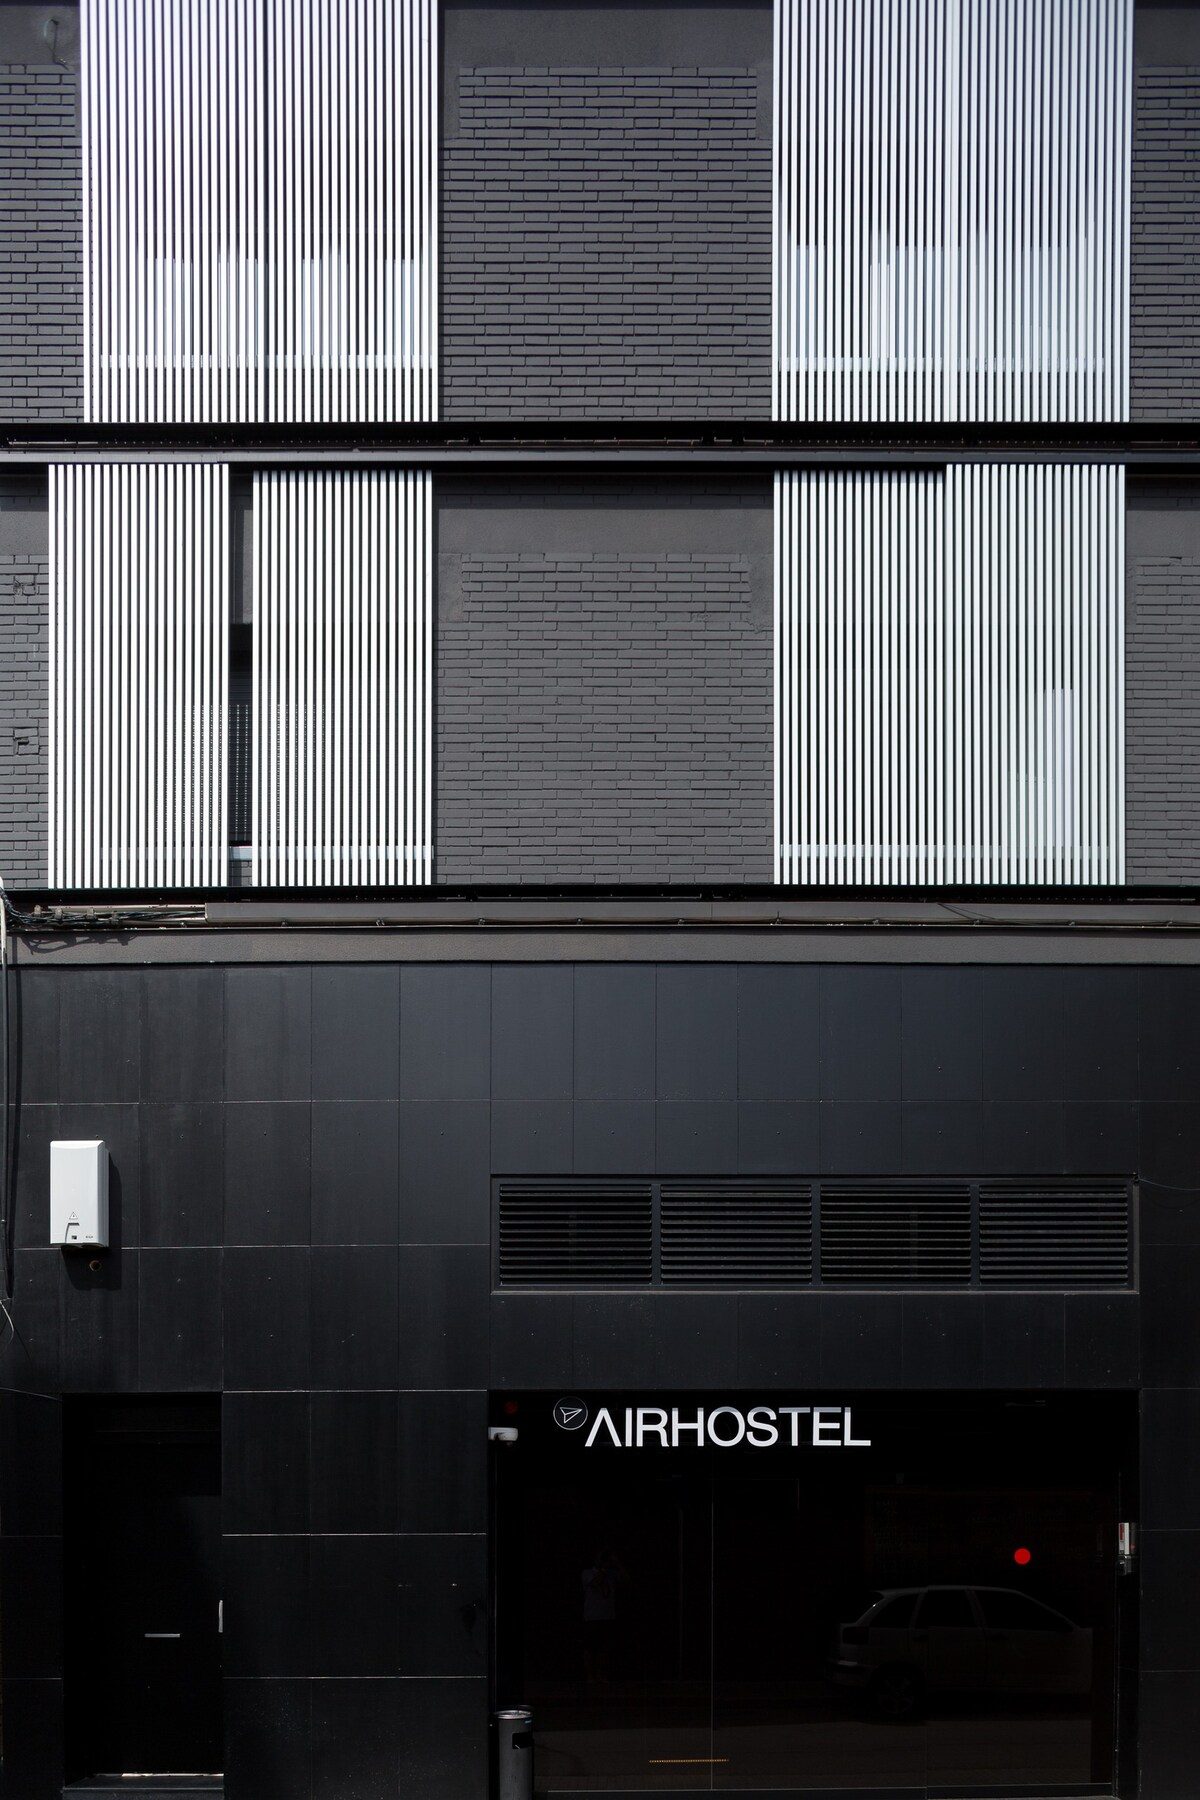 Airhostel Aeropuerto Barcelona客房x 4 (203)